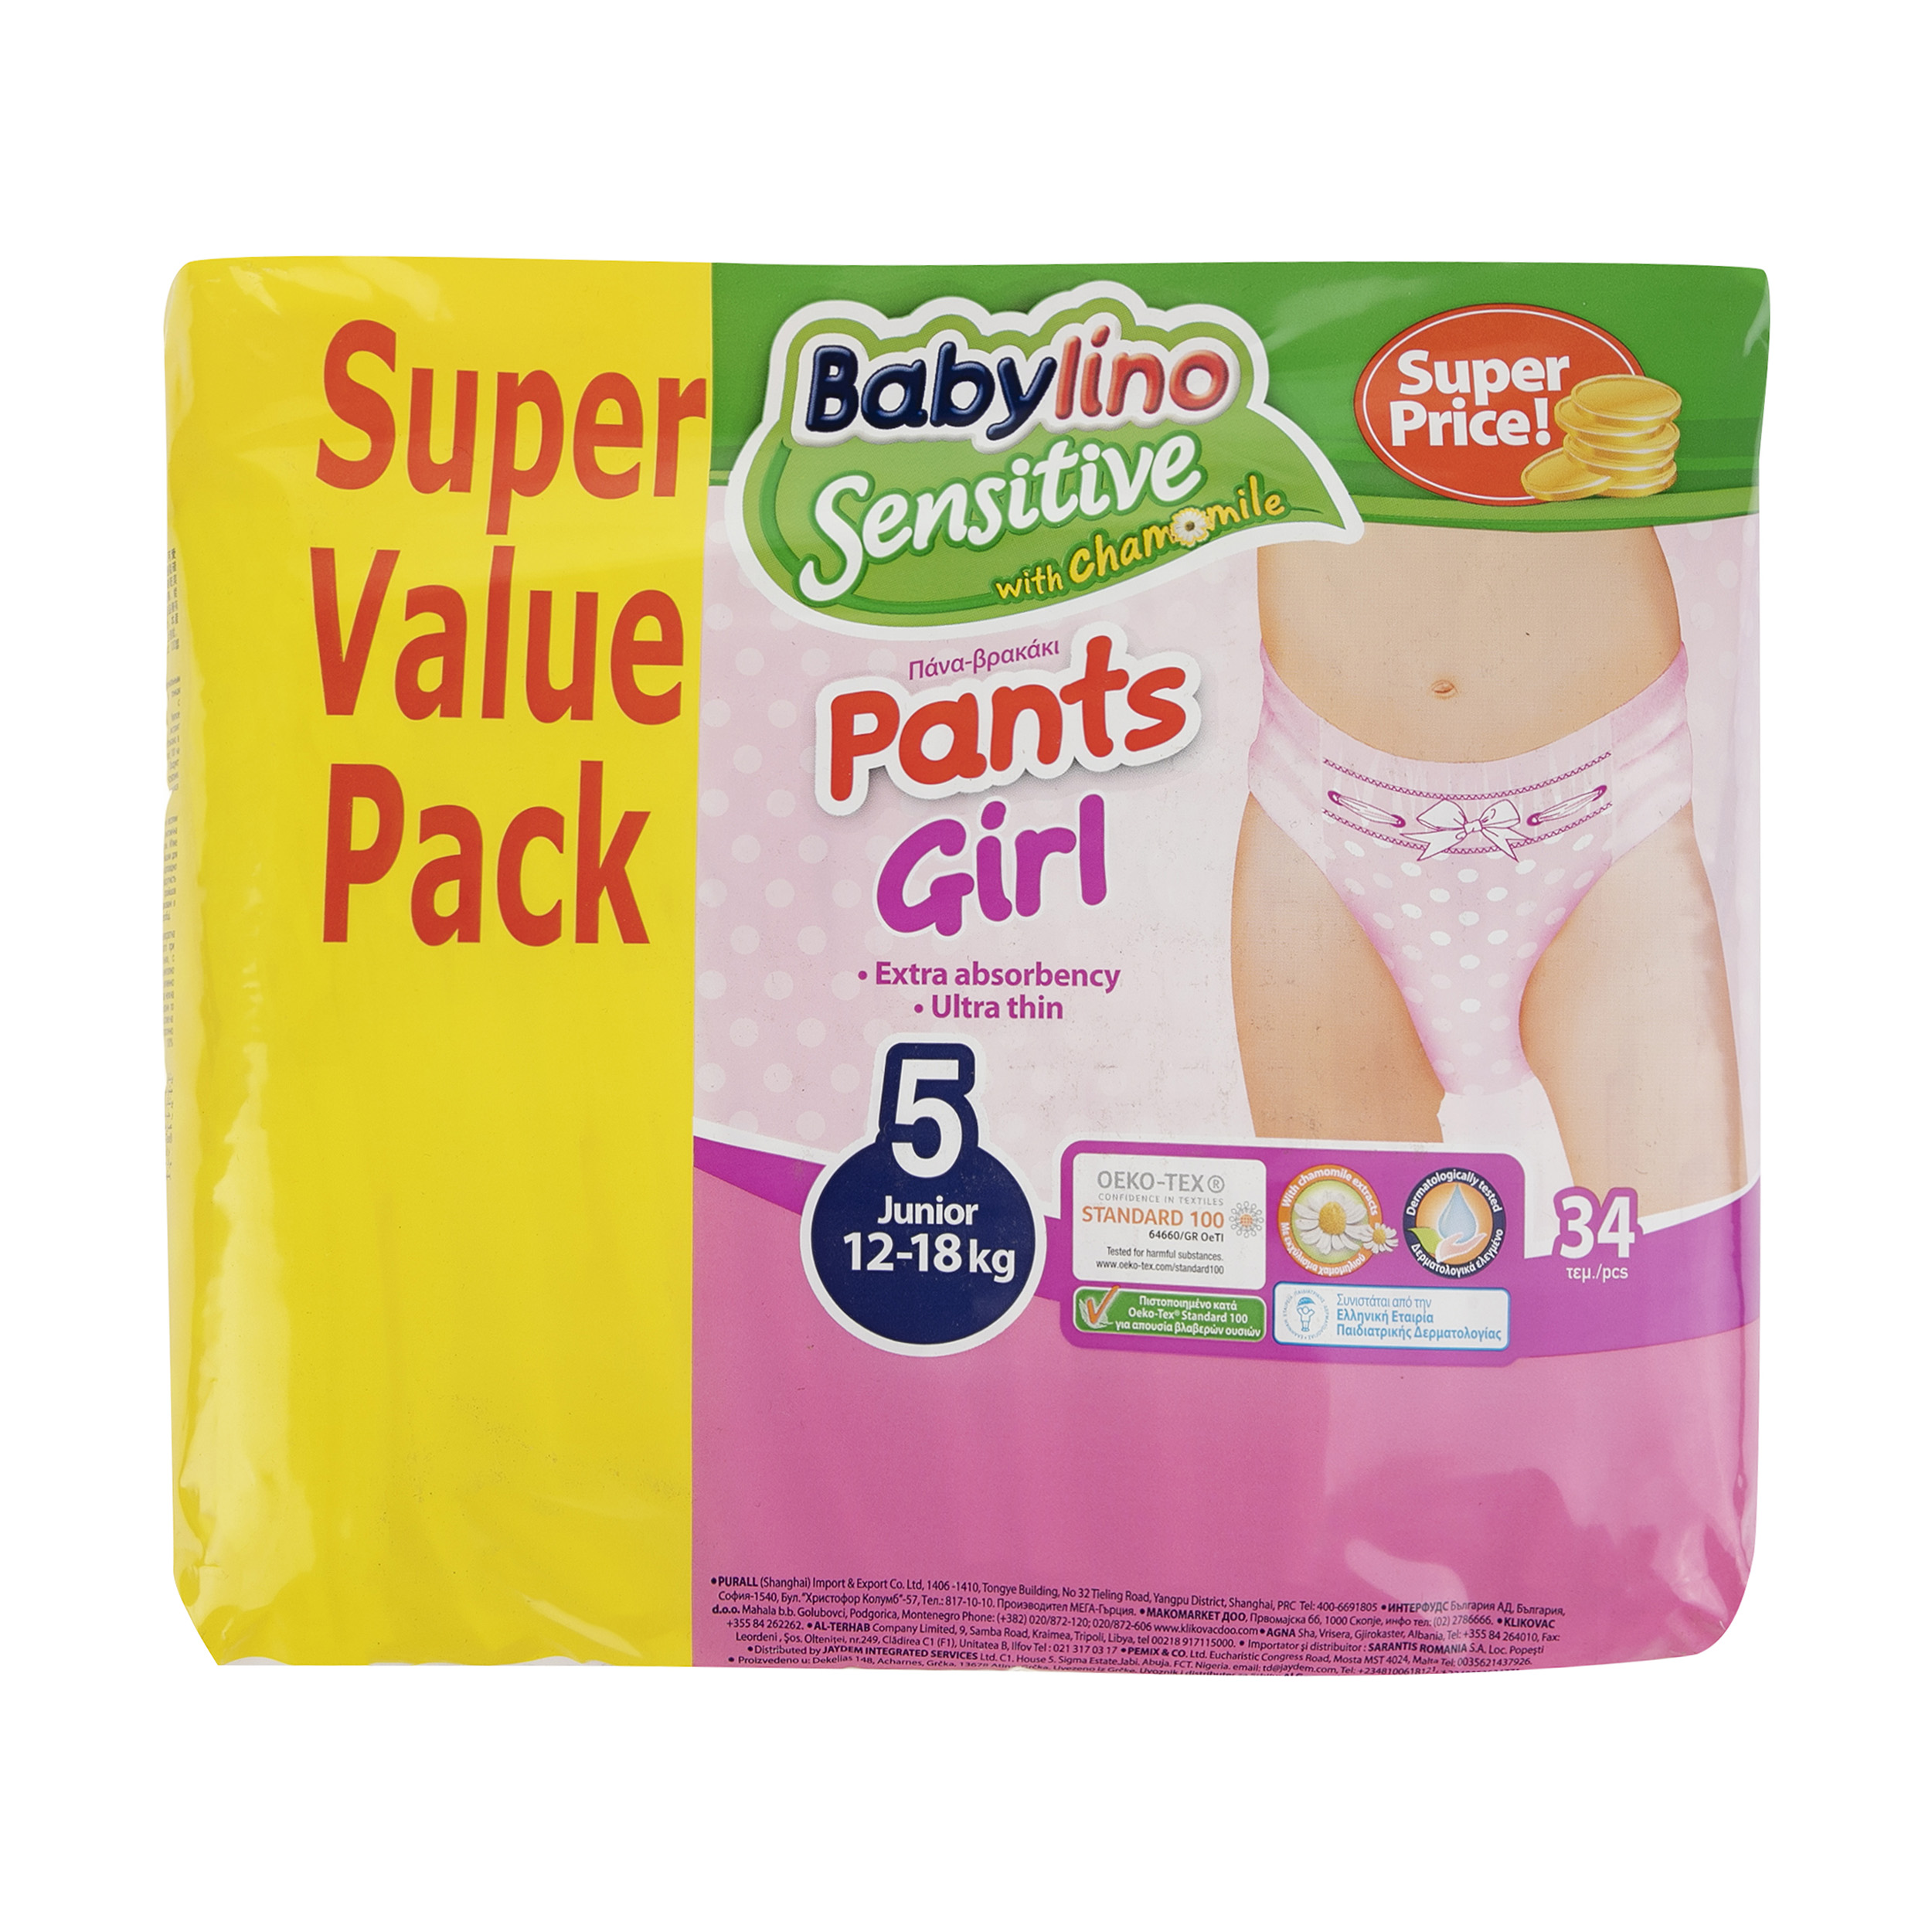 پوشک شورتی ضد حساسیت بیبی لینو مدل Pants Girl سایز 5 بسته 34 عددی